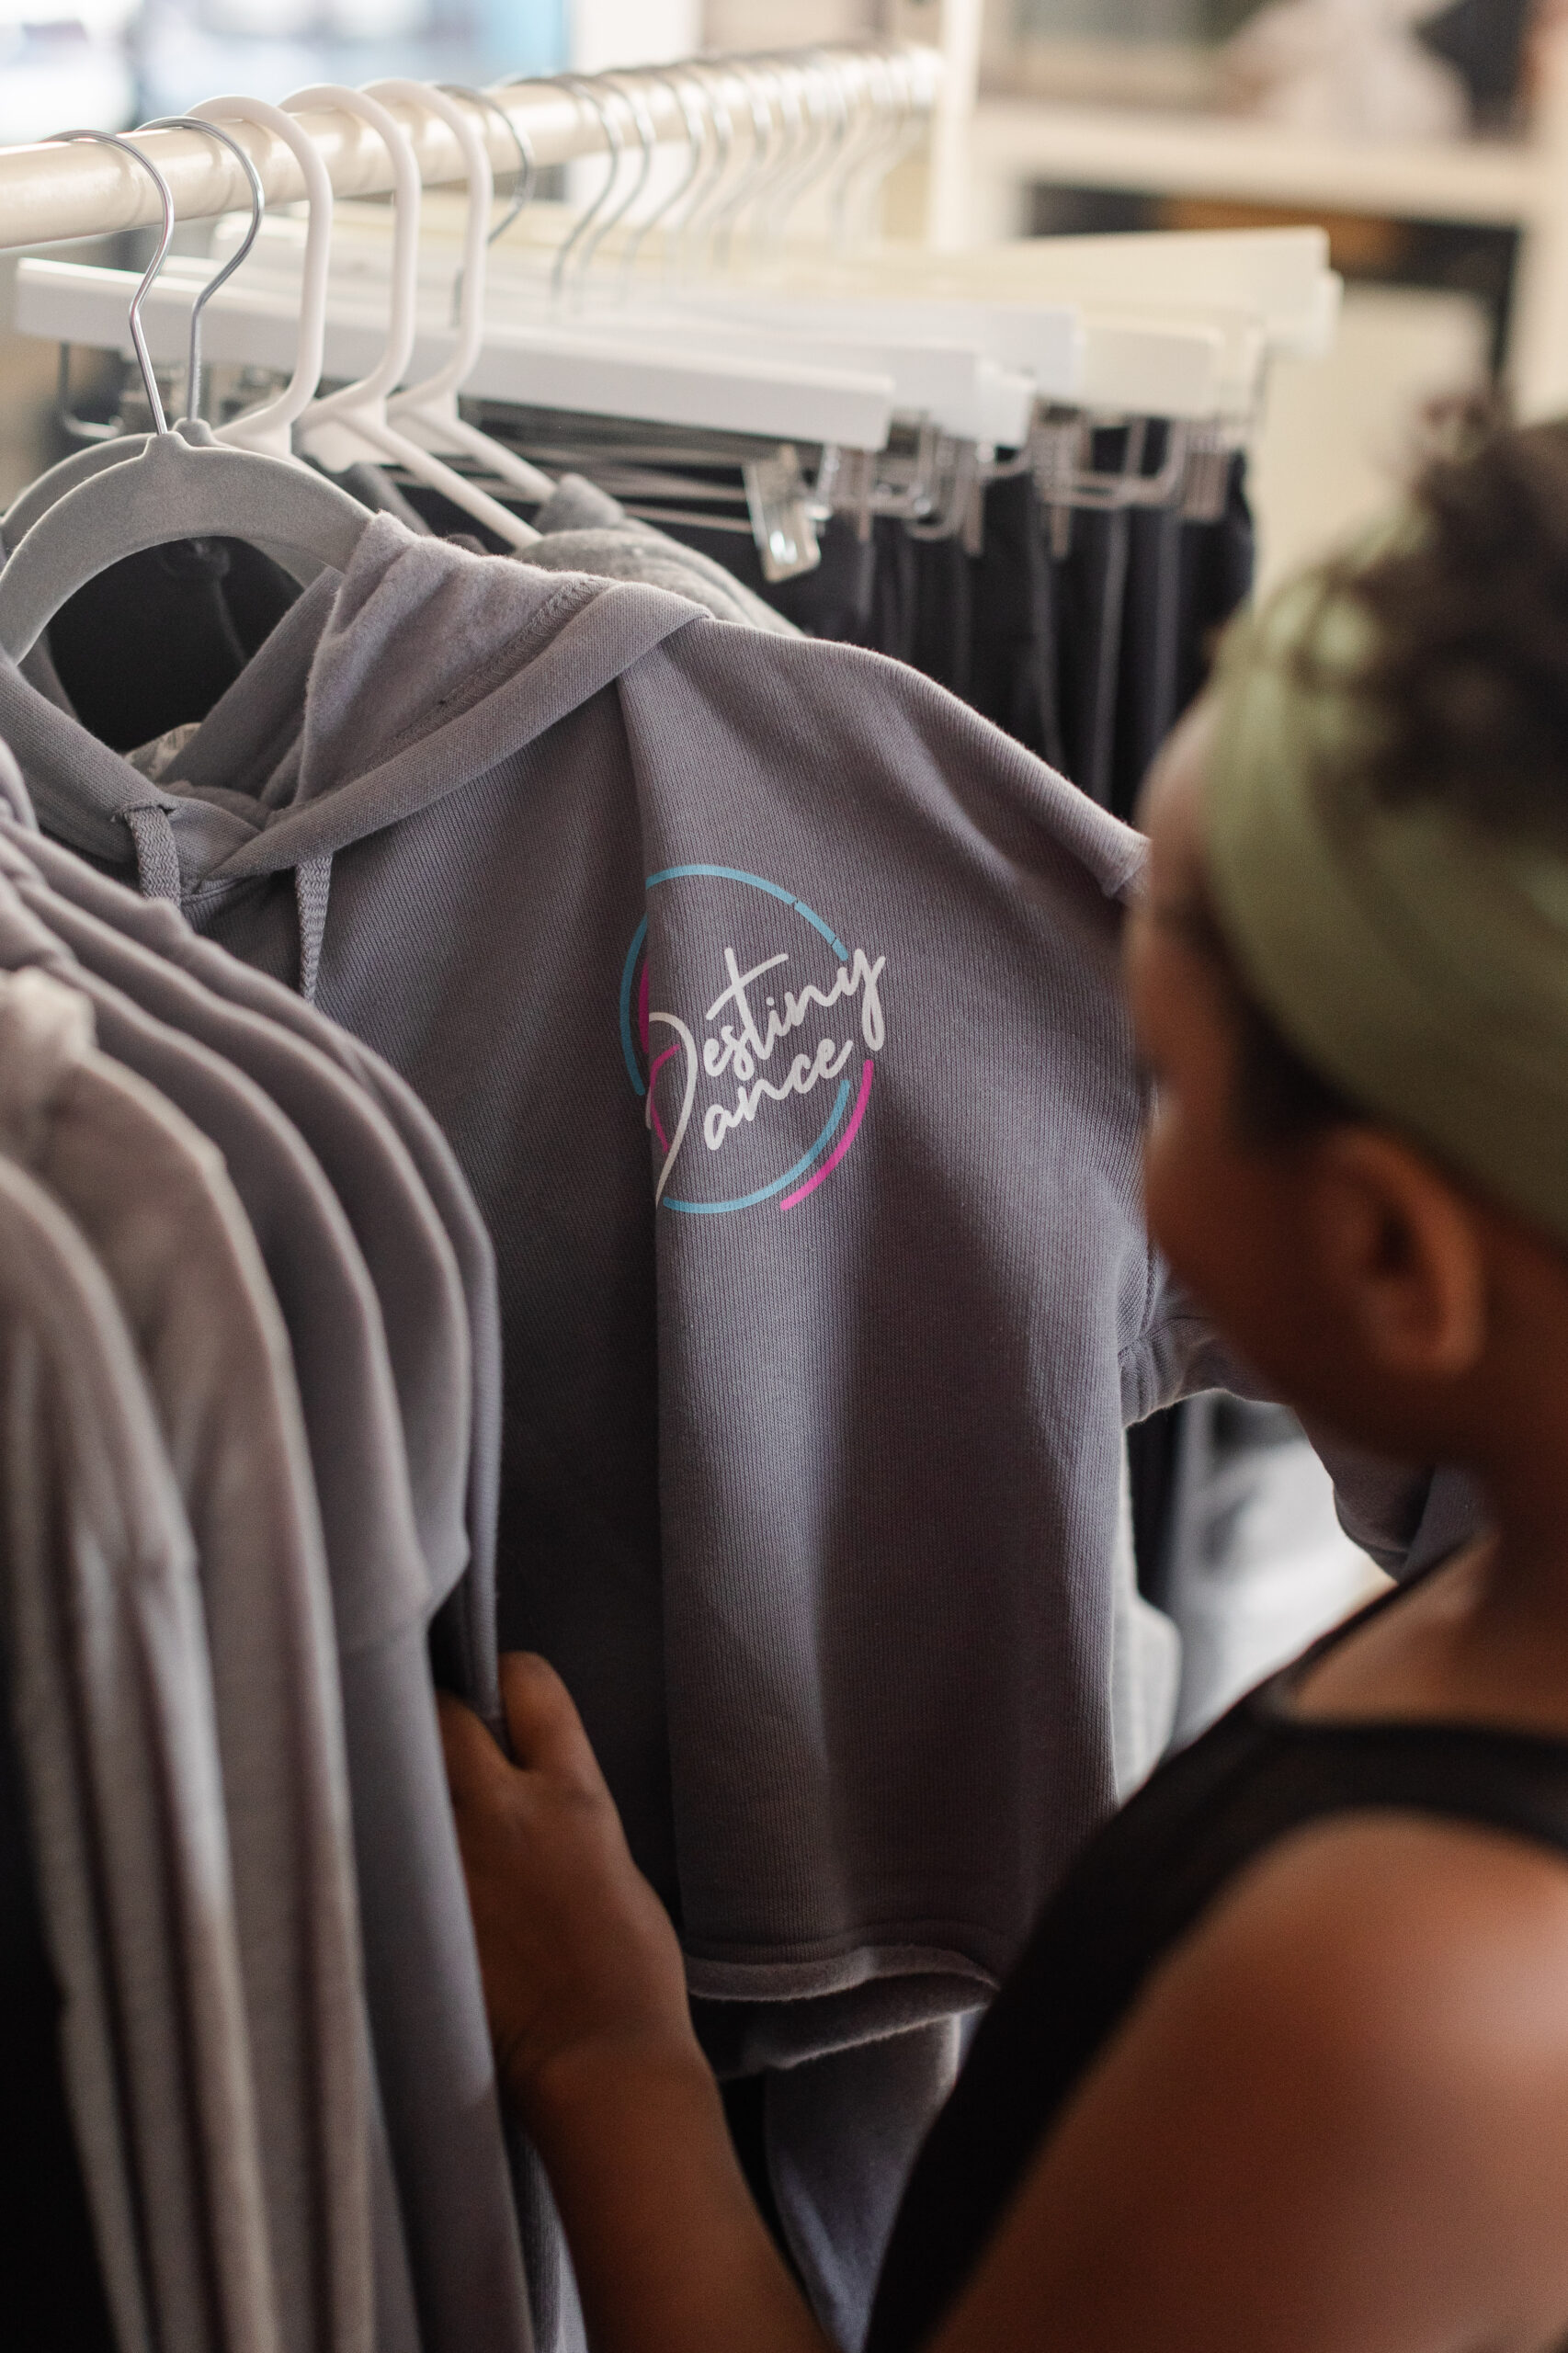 A student browses Destiny Dance merchandise in the studio shop